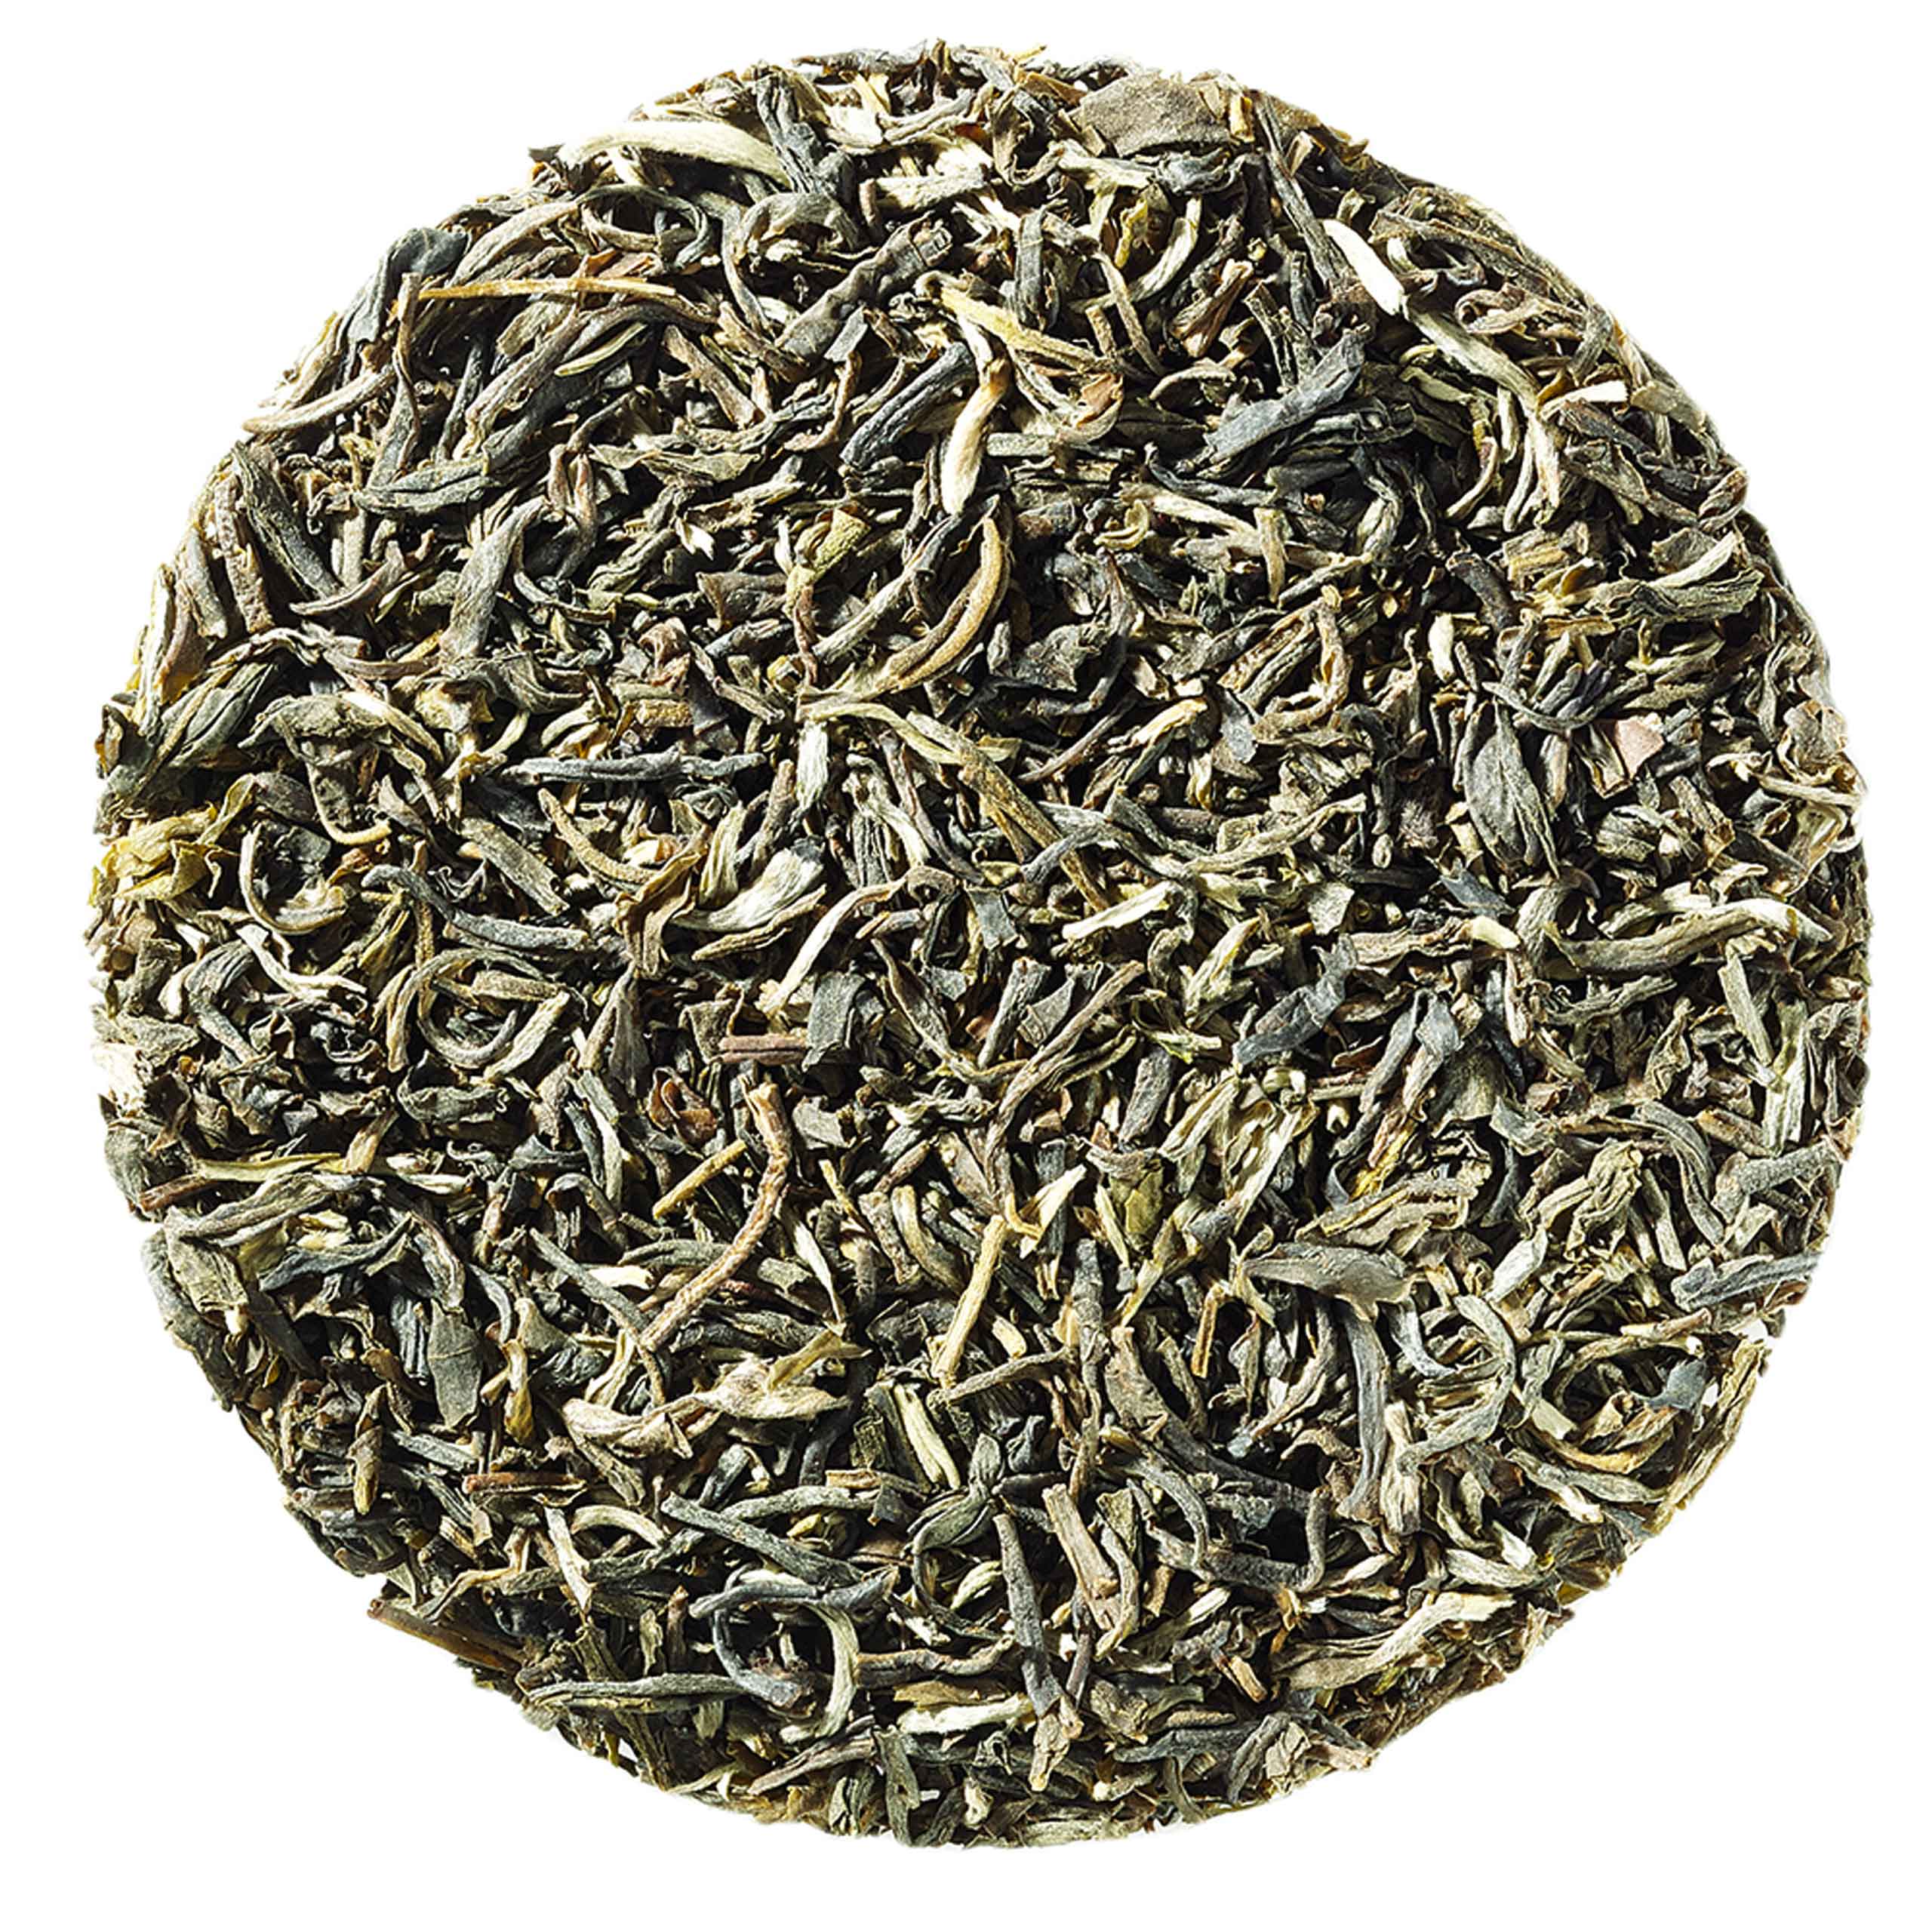 Composition of Jasmine Green tea